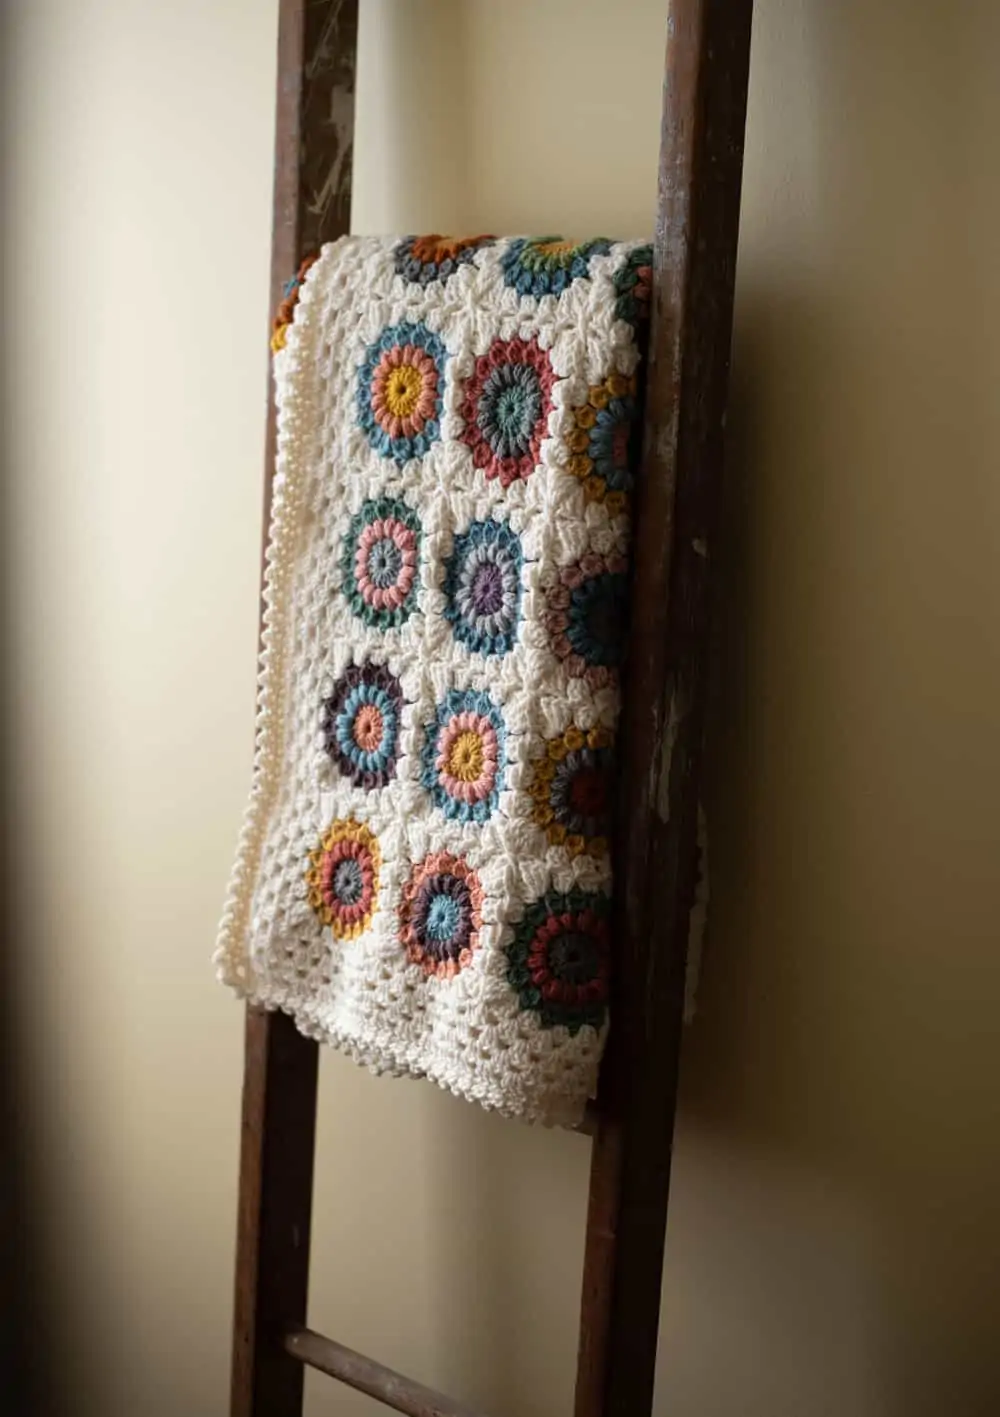 Crochet afghan on a ladder